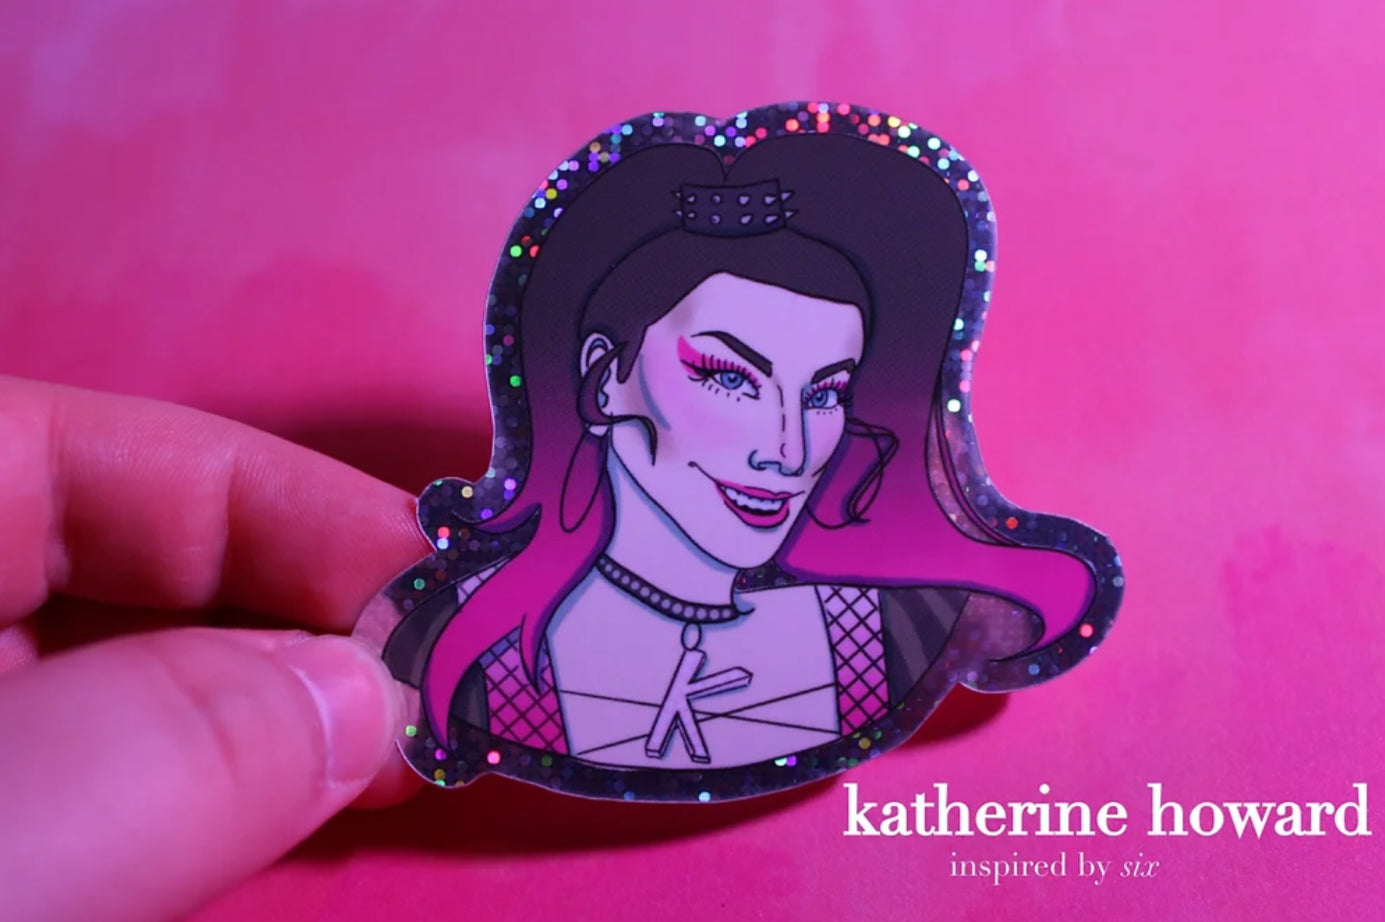 katherine howard (sticker)